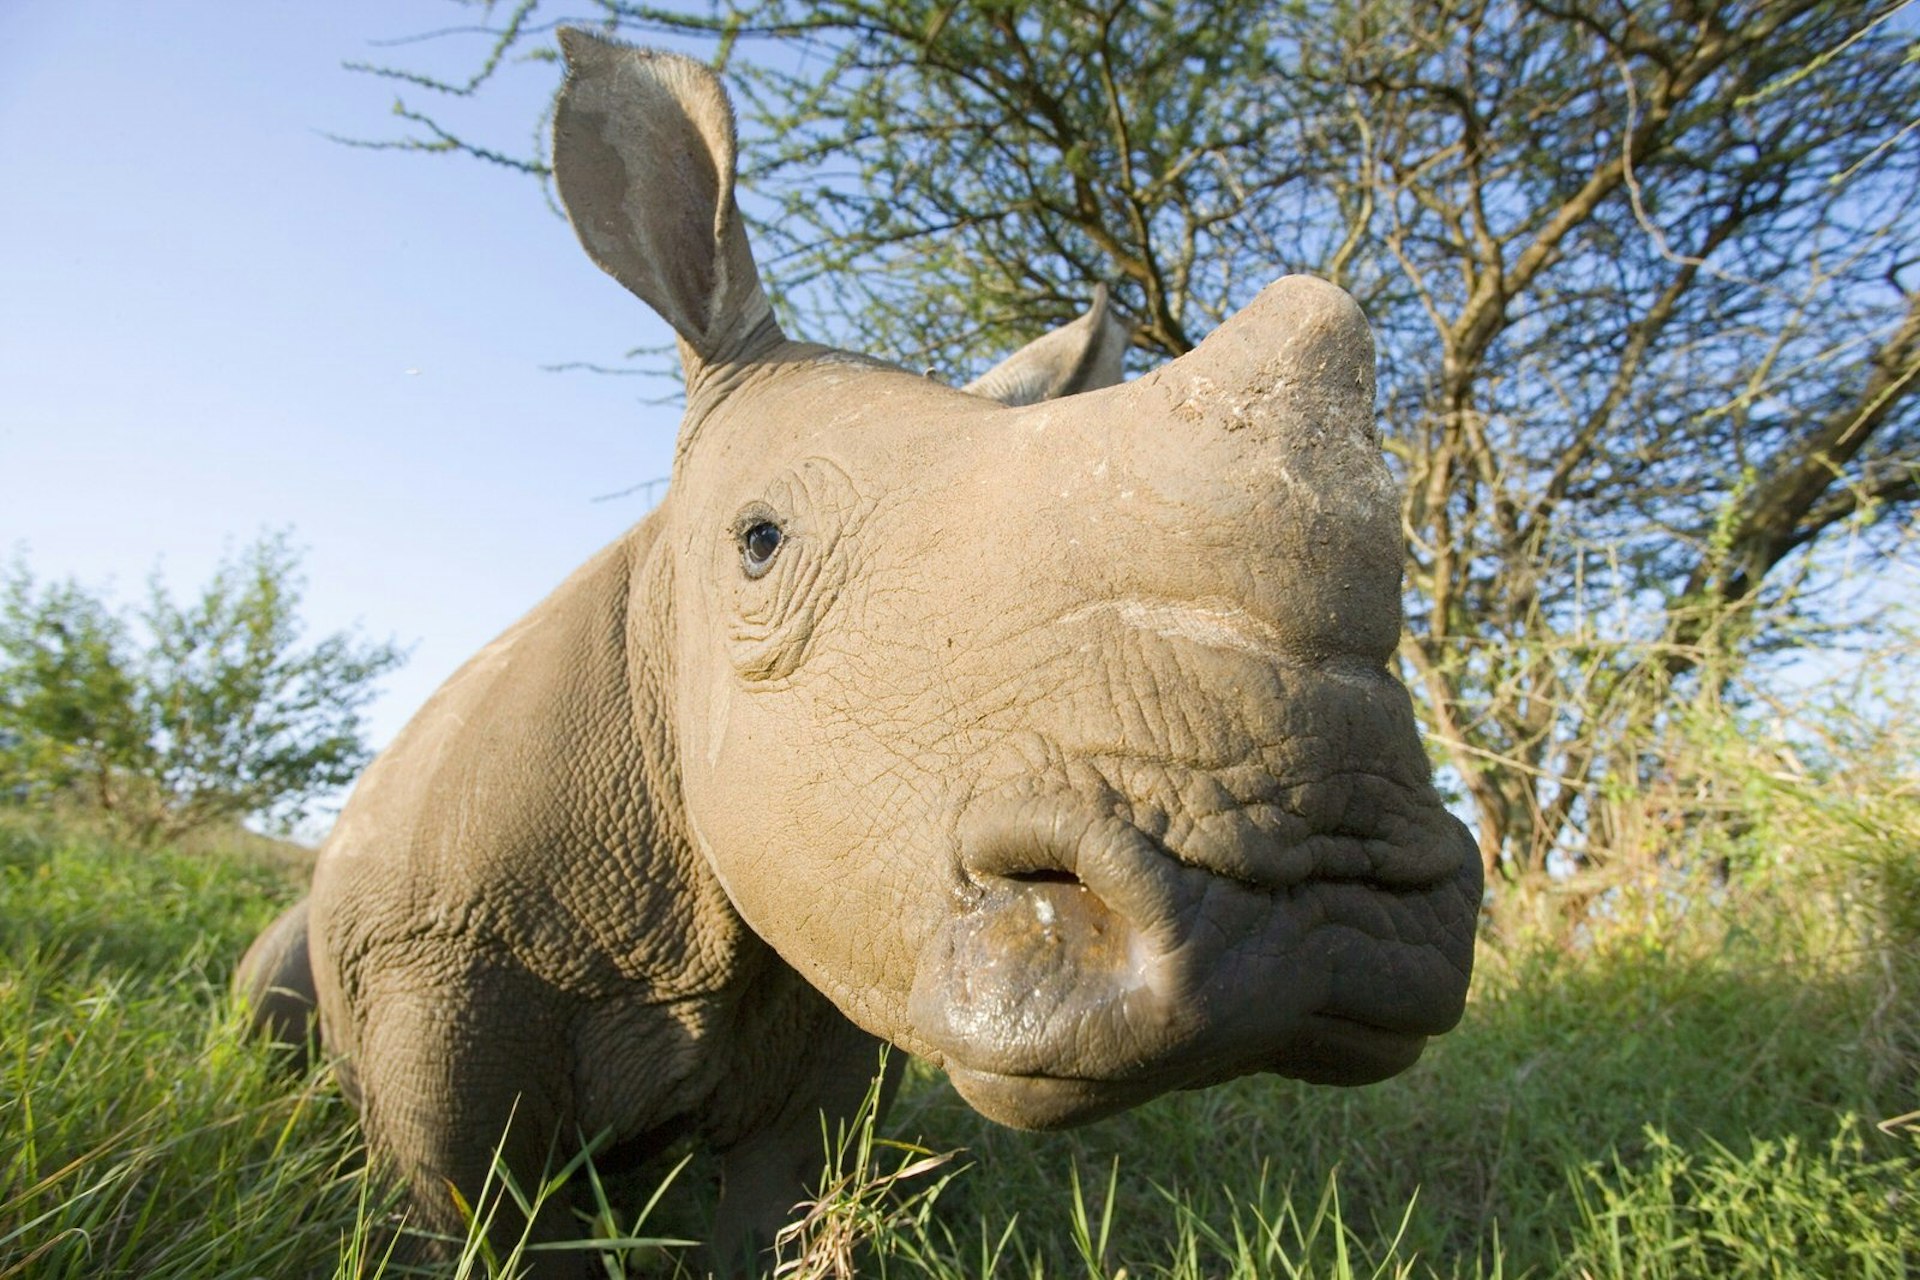 Rhino at Lewa Wildlife Conservancy, Kenya © Martin Harvey / Getty Images